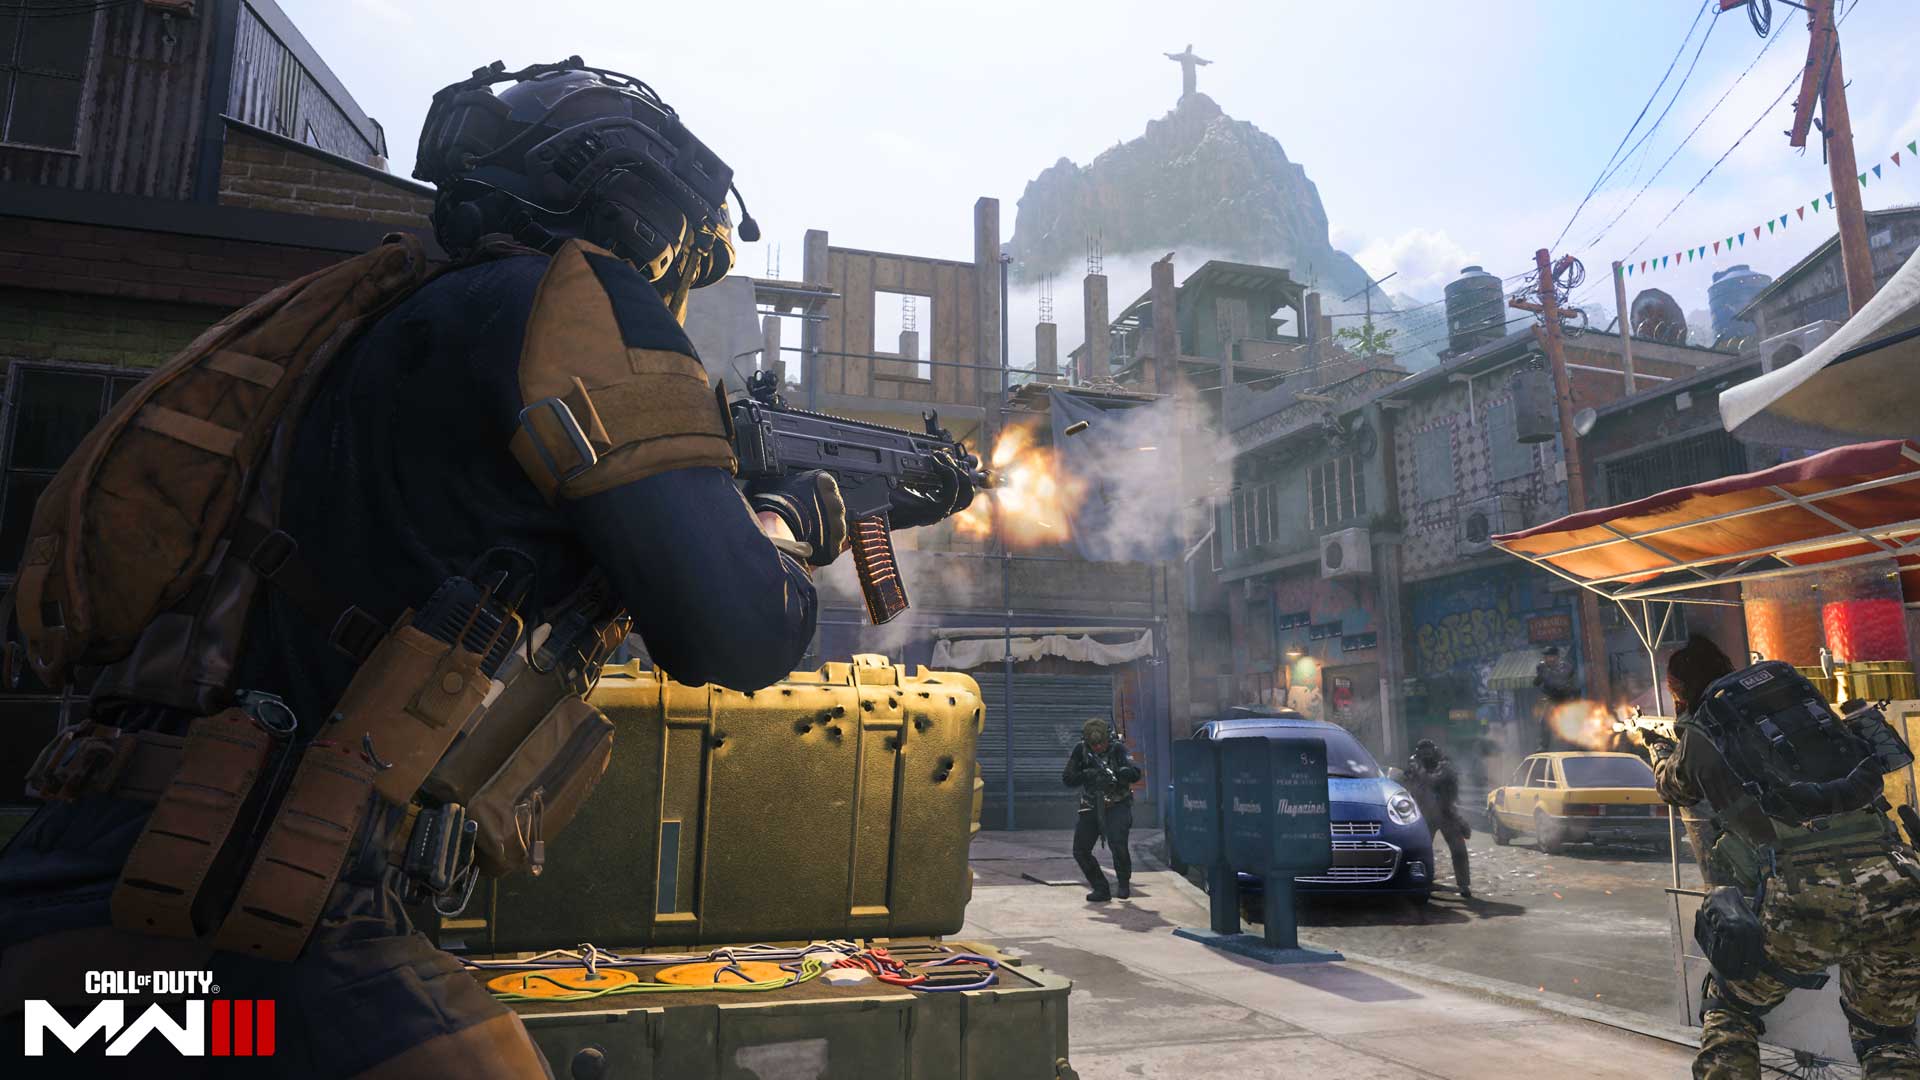 Can You Play Call of Duty: Modern Warfare 3 on PlayStation Portal